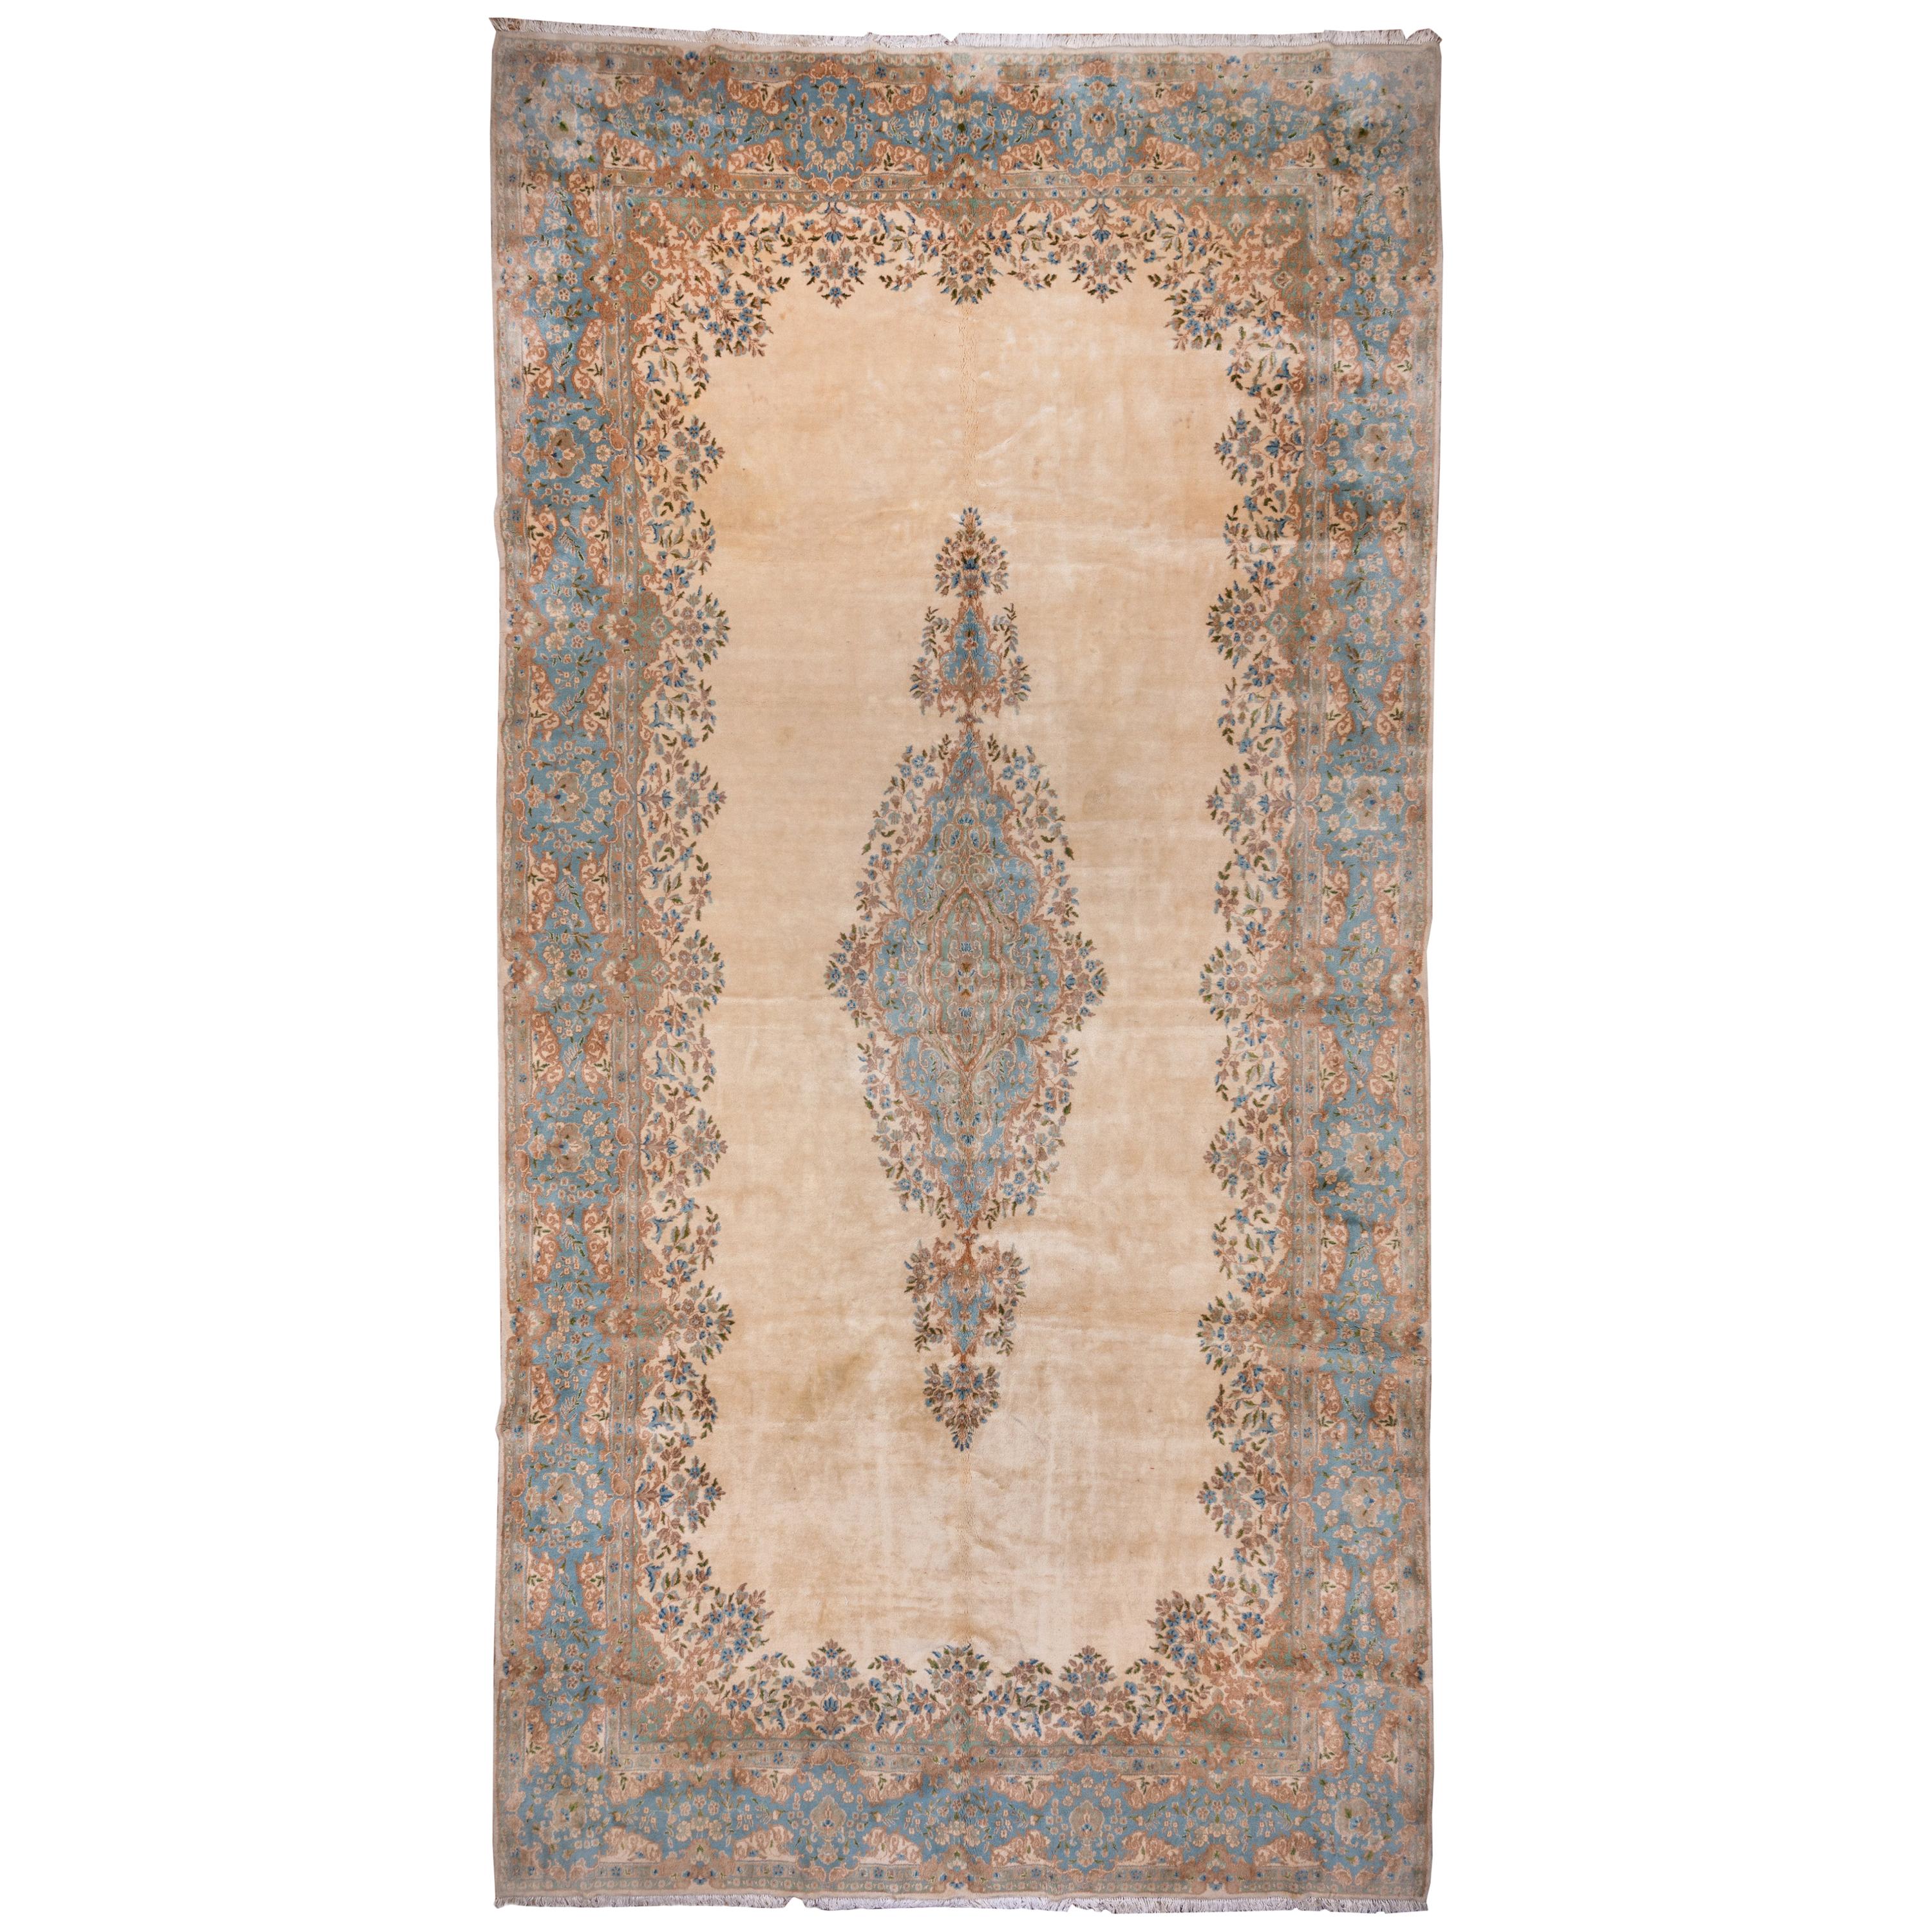 Wide Antique Persian Kerman Gallery Carpet, Ivory Field, Light Blue Accents